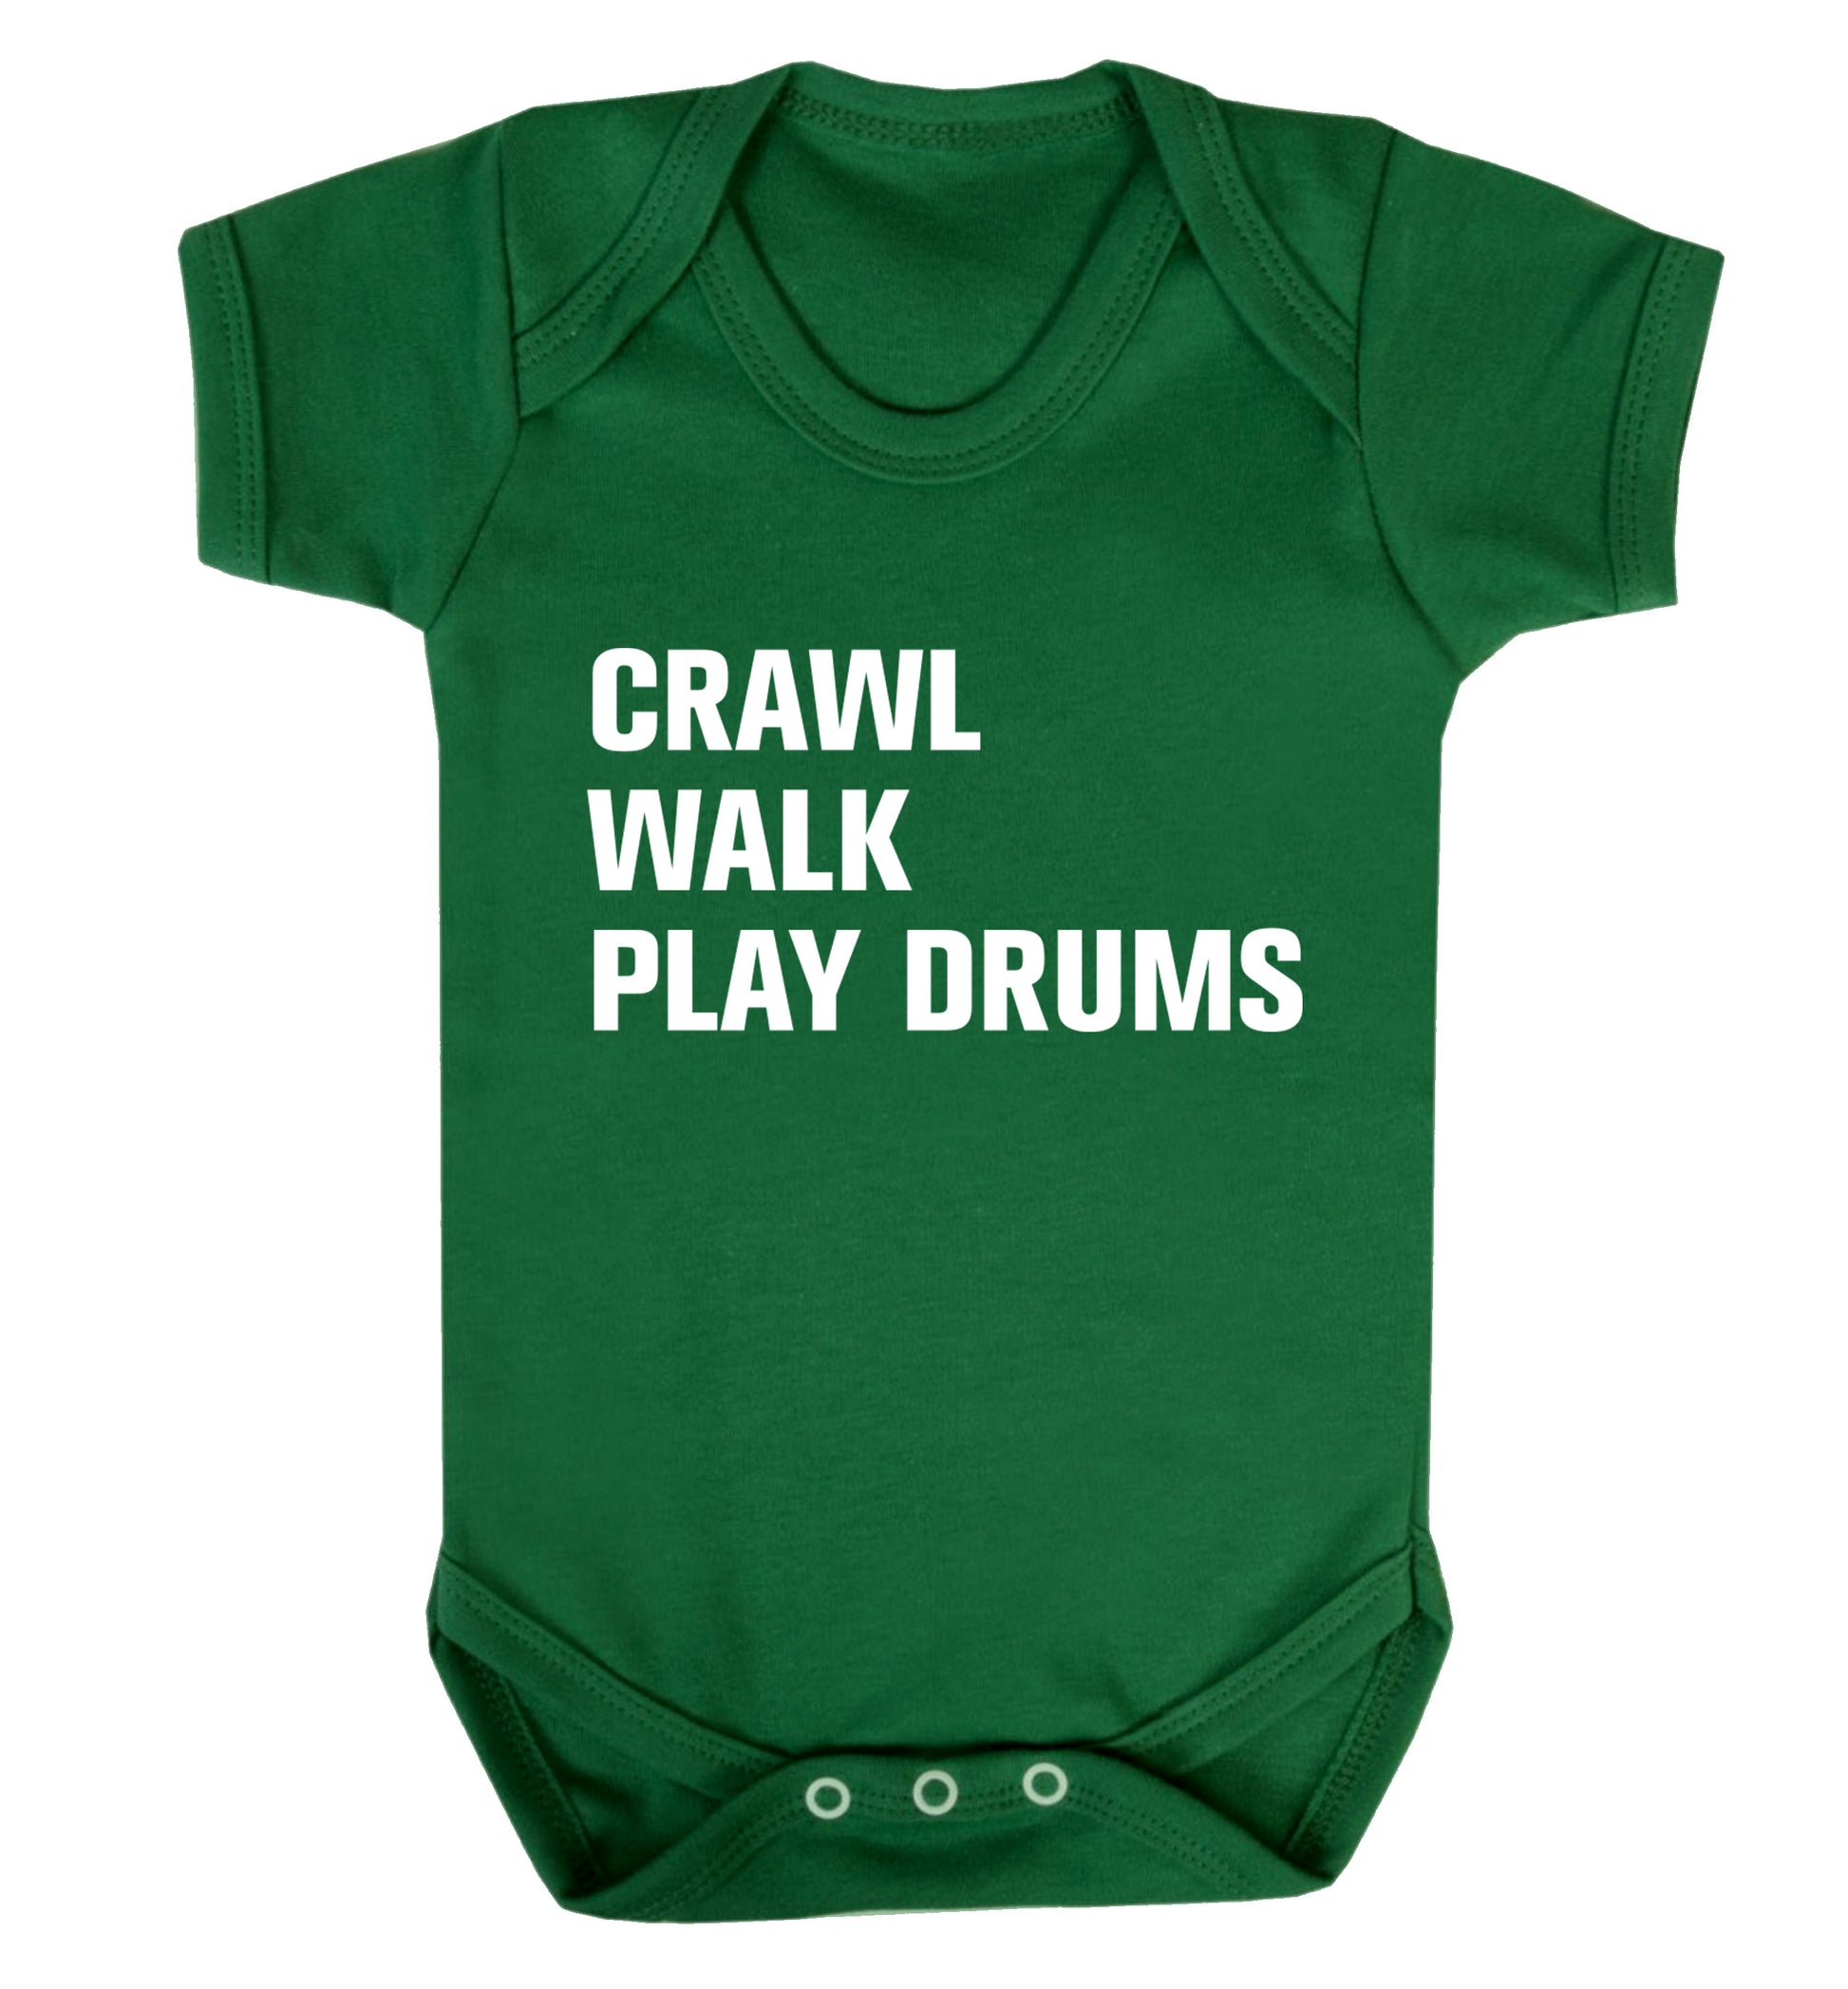 Crawl walk play drums Baby Vest green 18-24 months